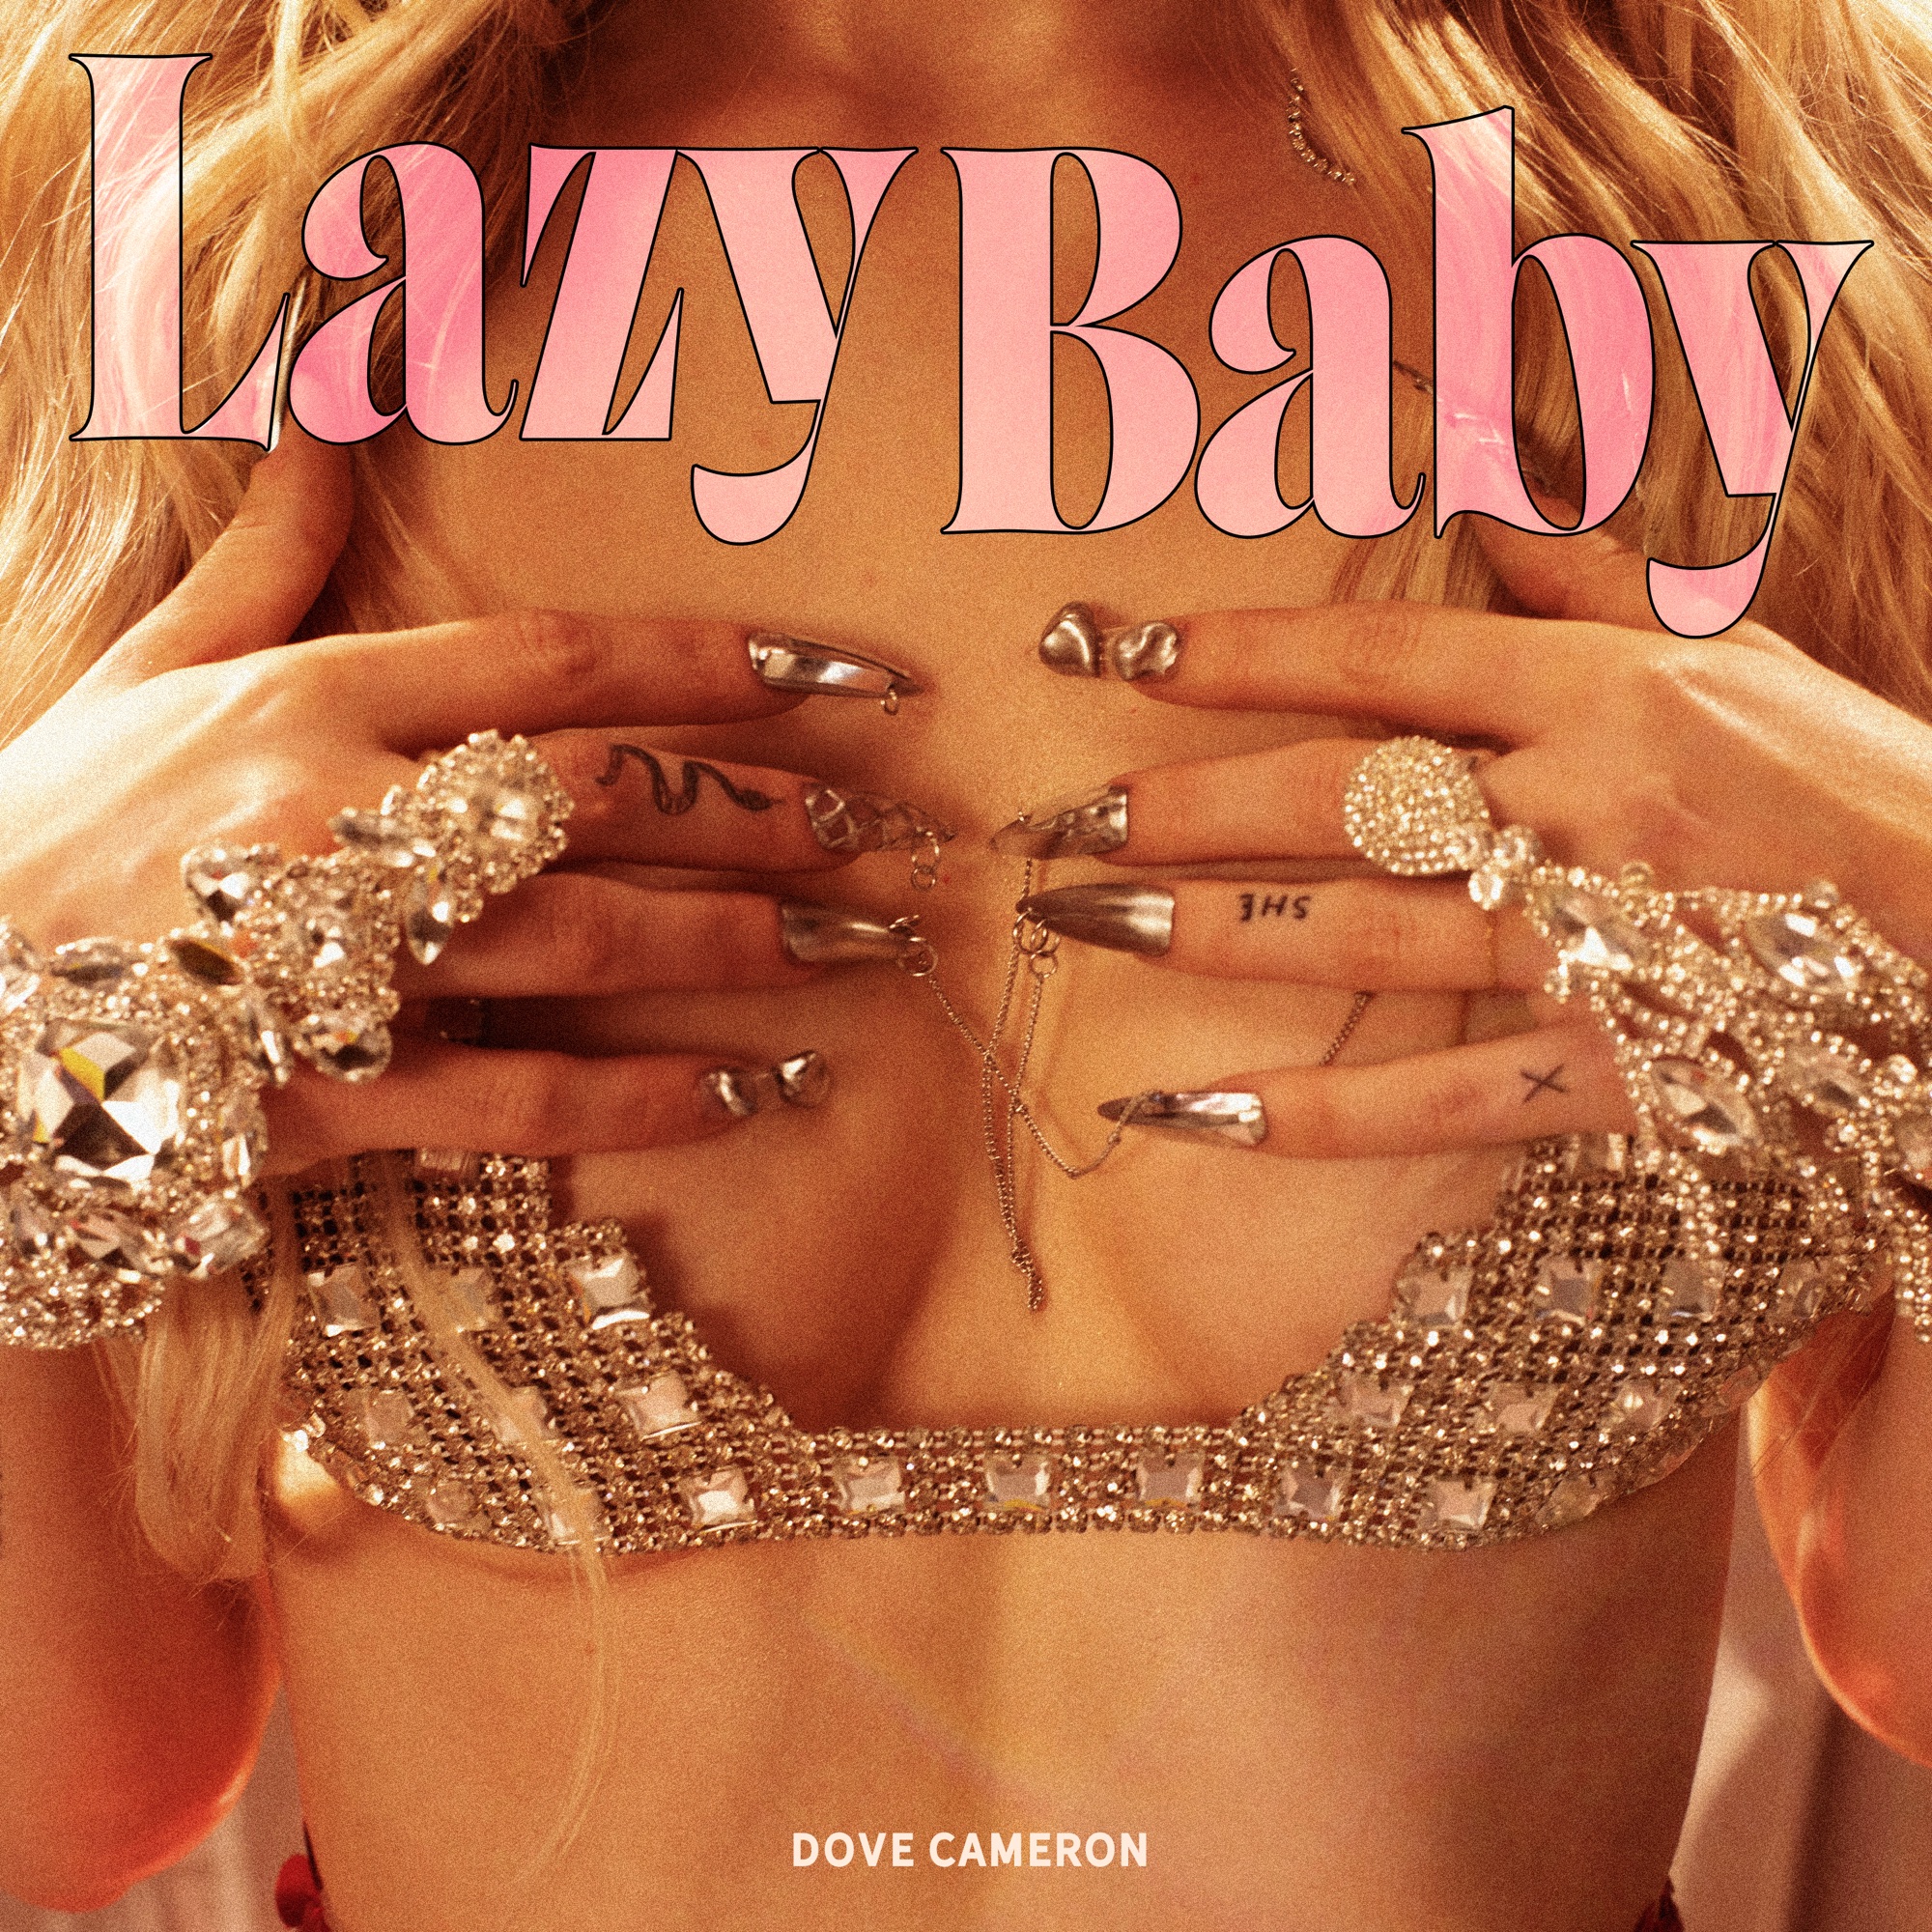 Dove Cameron - LazyBaby - Single